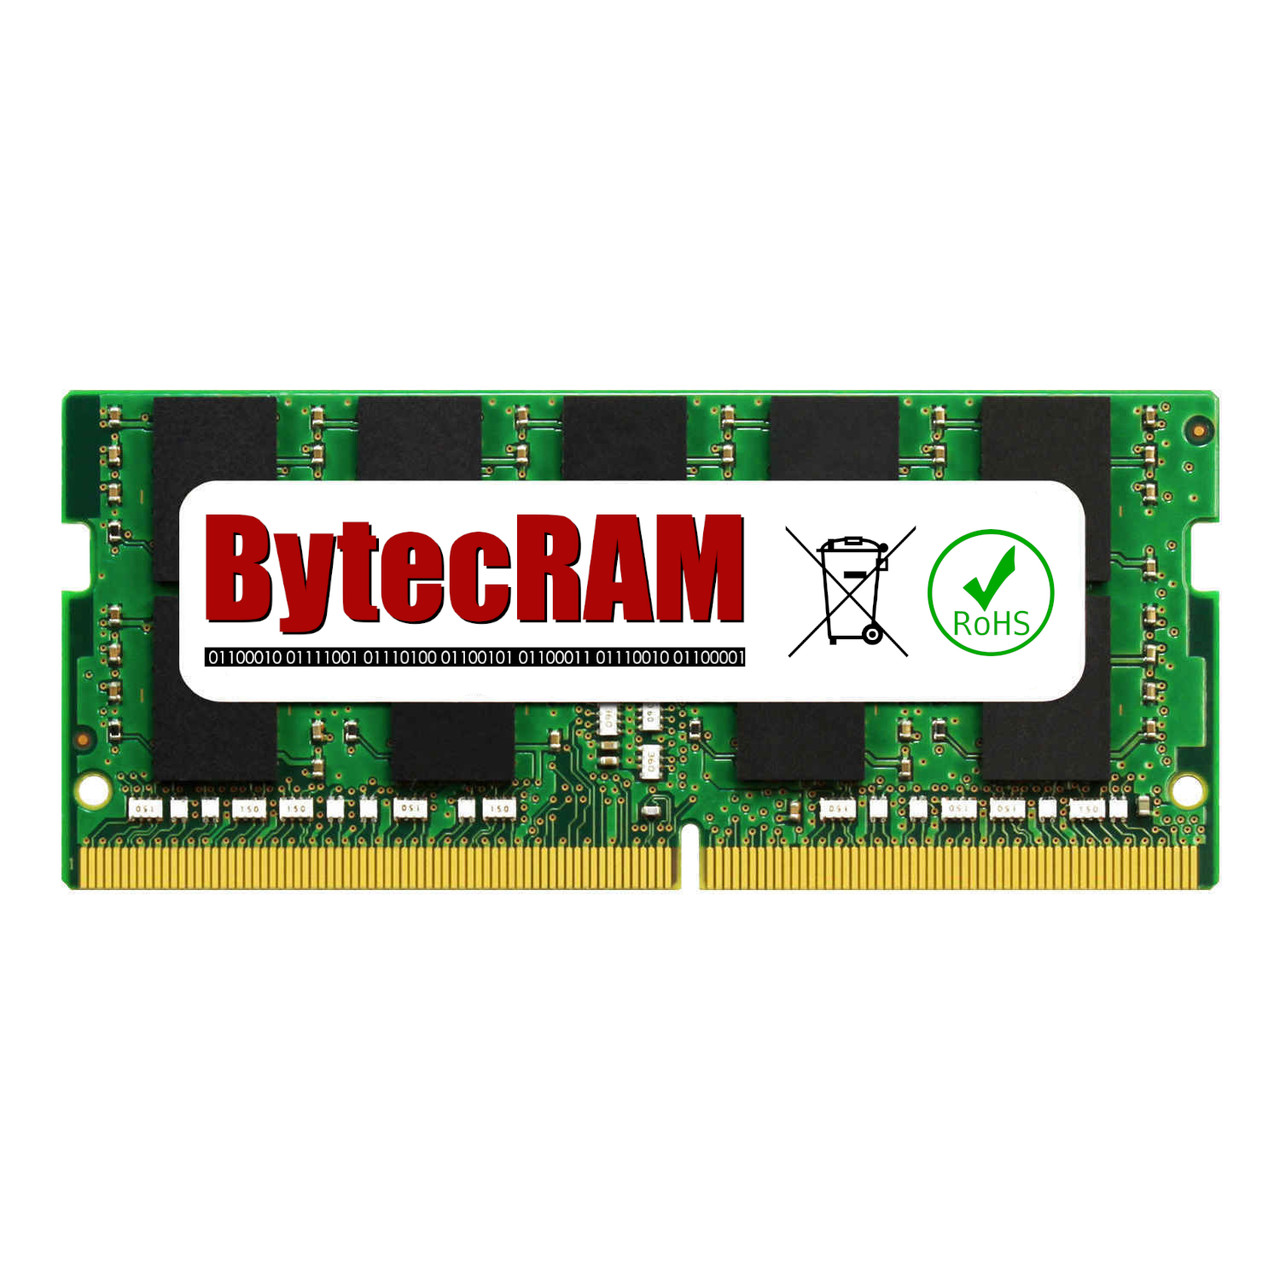 8GB Synology DS3622xs+ NAS DDR4 3200MHz ECC Sodimm Memory RAM Upgrade | BytecRAM Memory